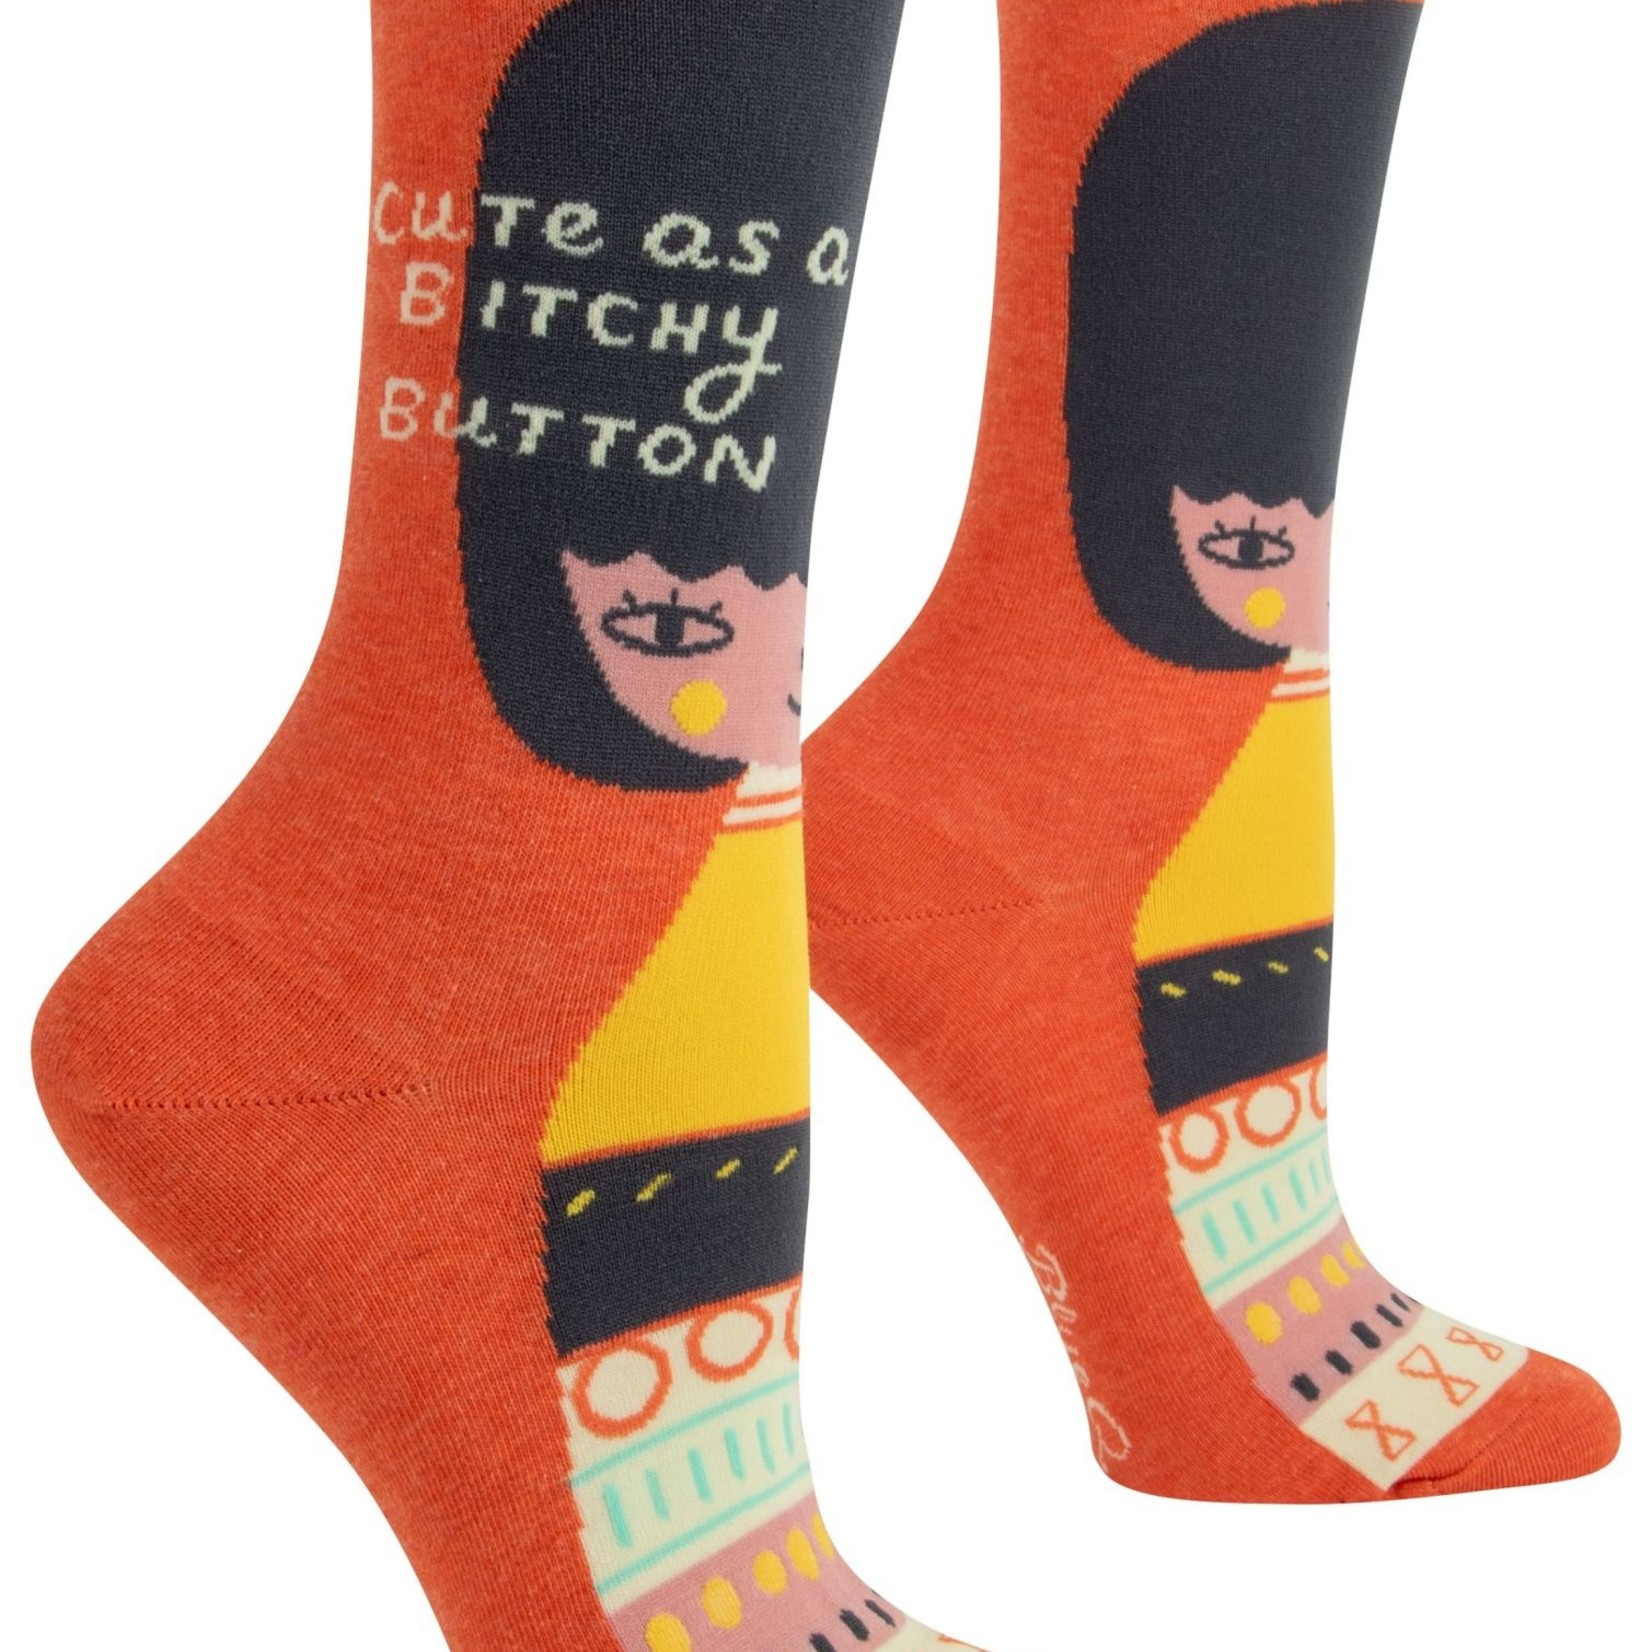 Bitchy Button Women's Crew Socks